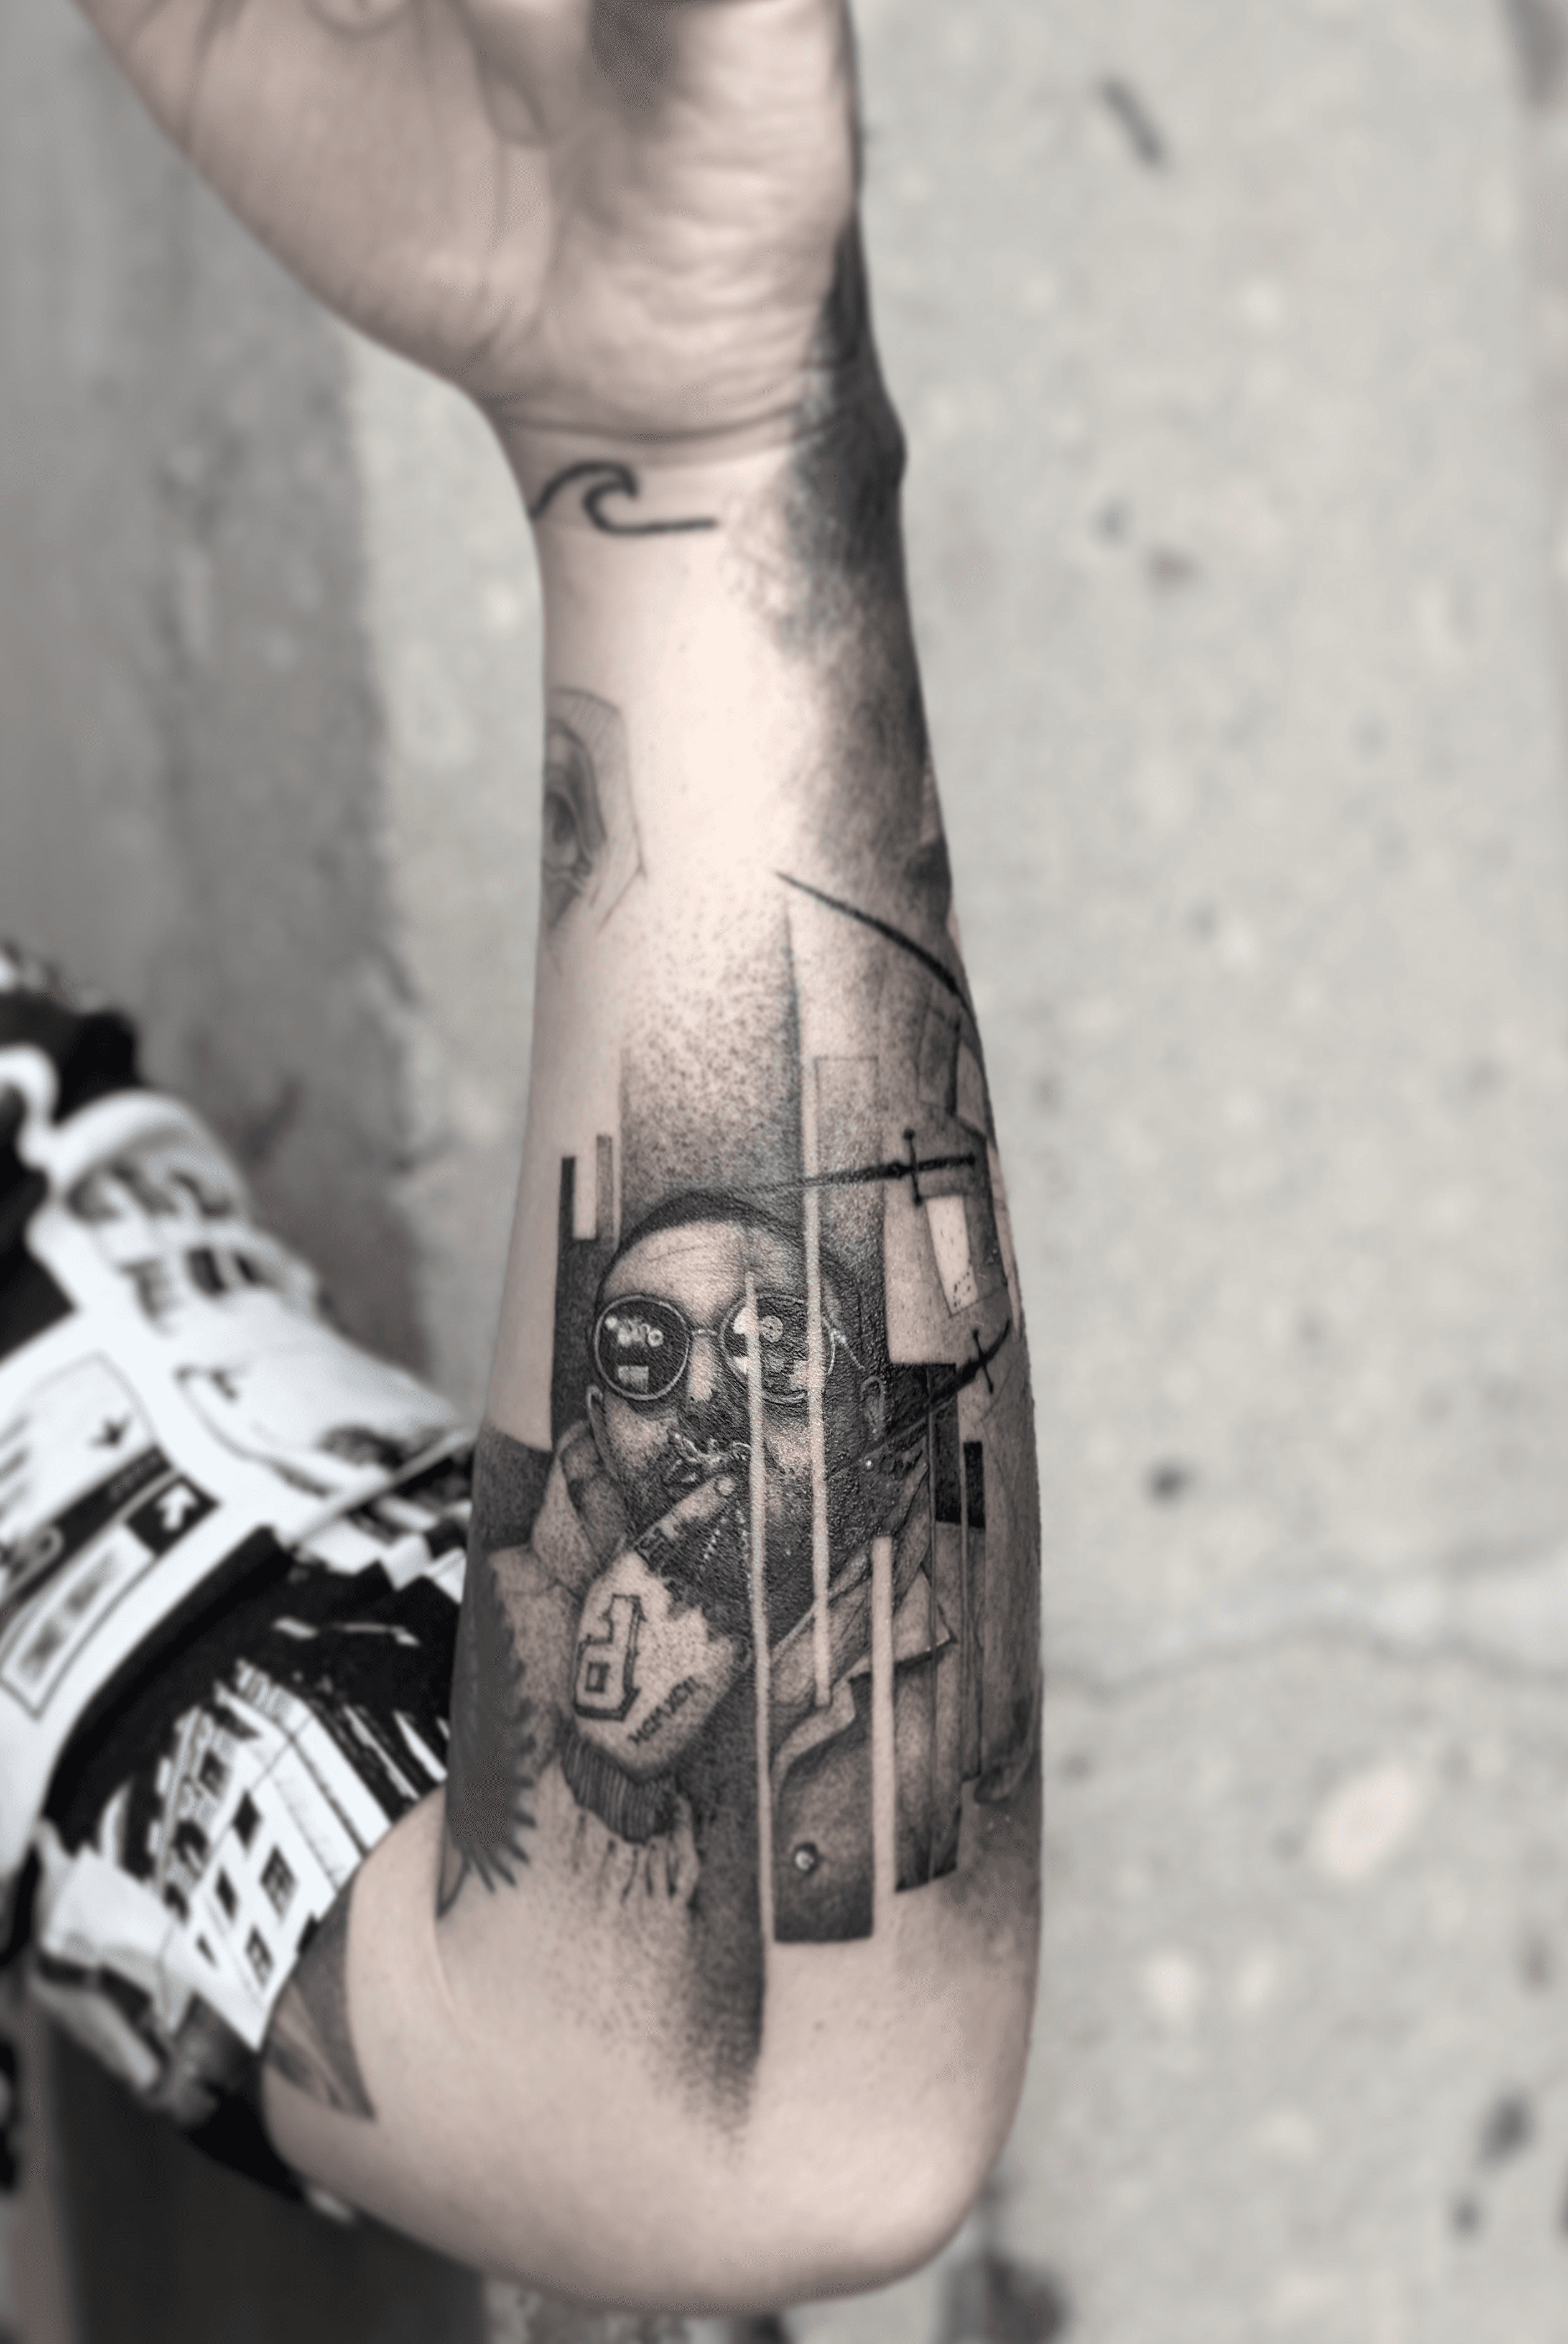 Mac Millers 42 Tattoos  Their Meanings  Body Art Guru  Mac miller Mac  miller tattoos Tattoos with meaning